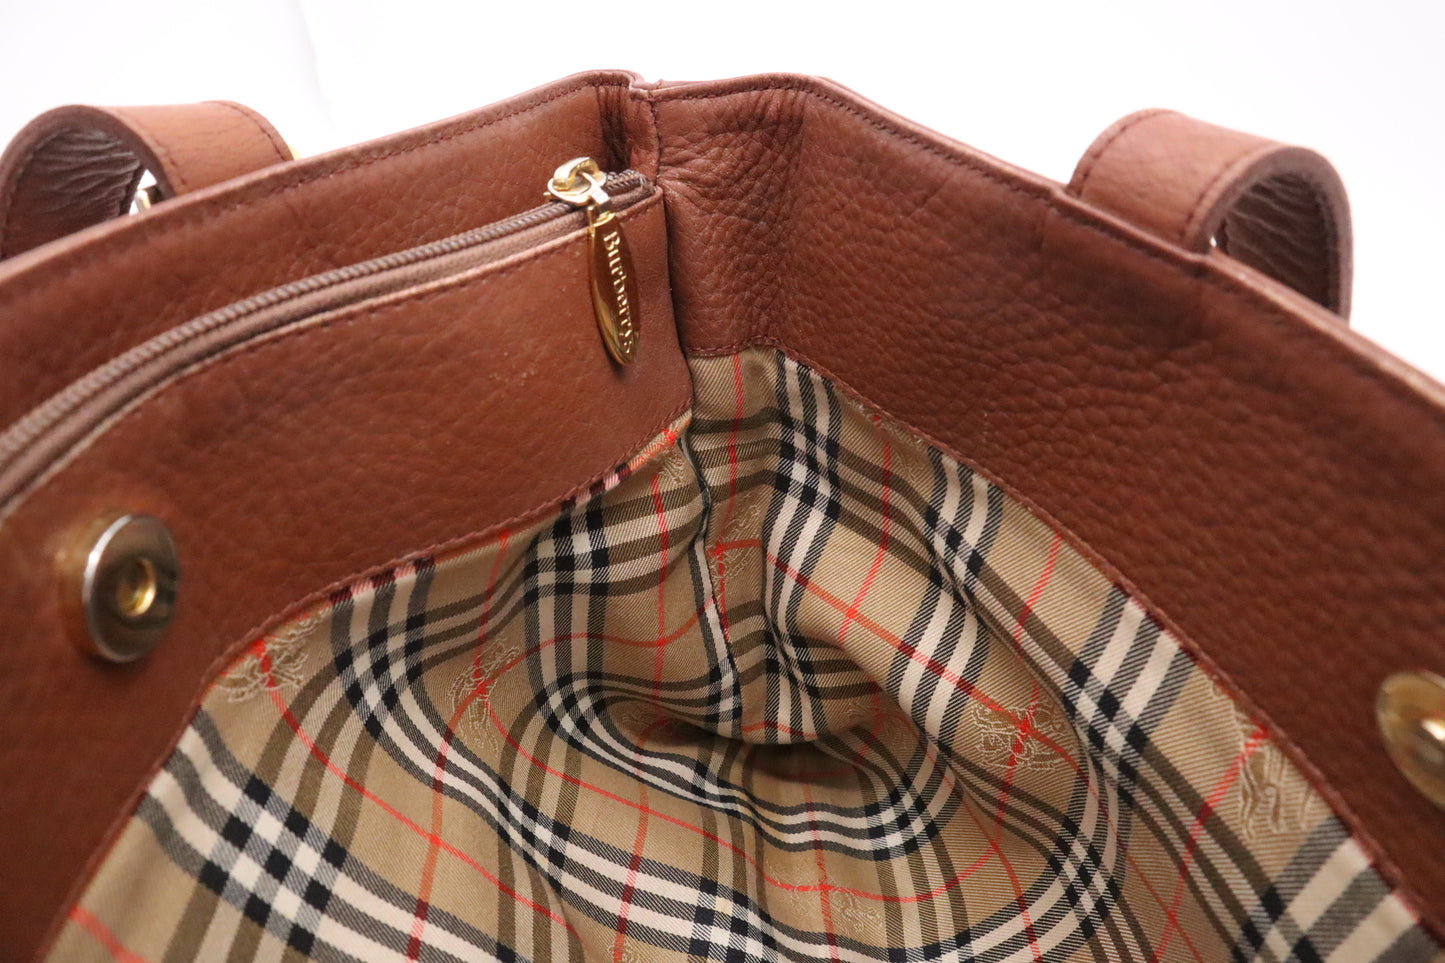 Burberry Handbag in Brown Leather